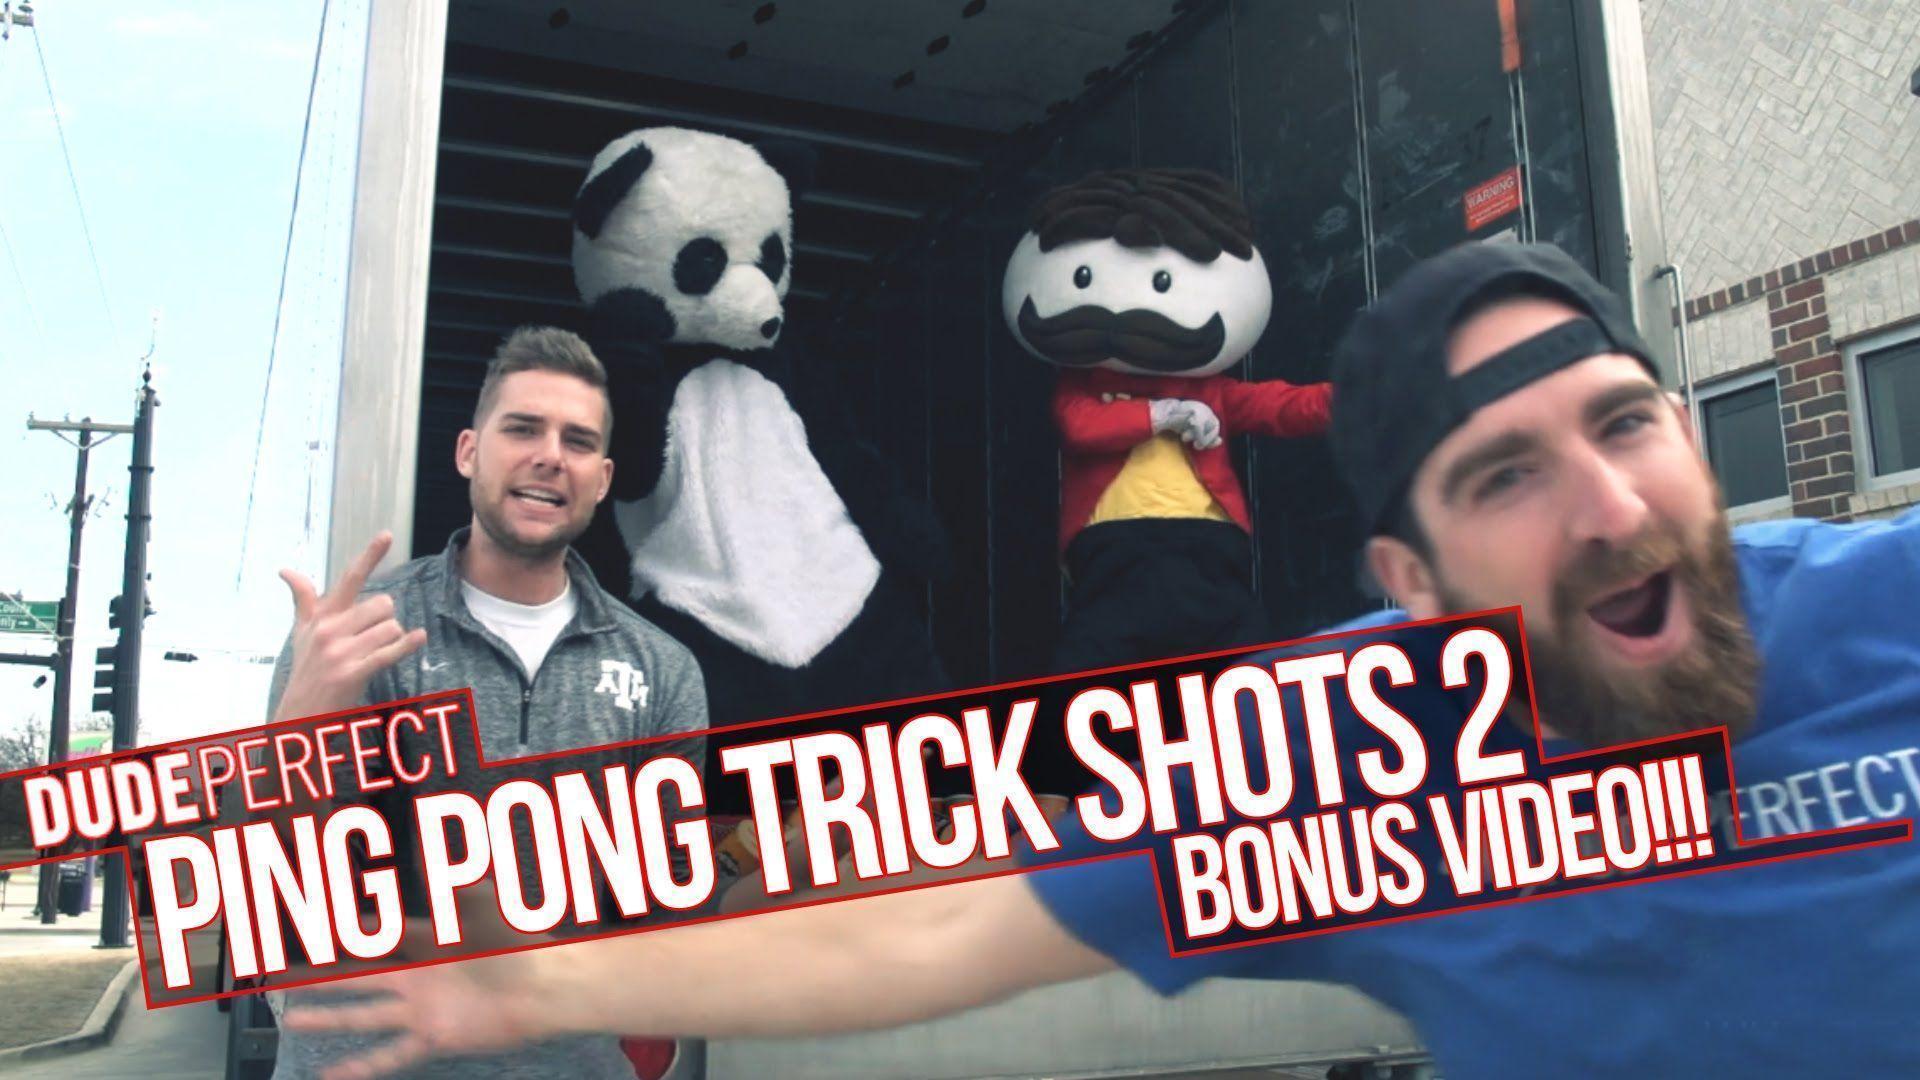 Dude Perfect: Ping Pong Trick Shots 2 BONUS Video